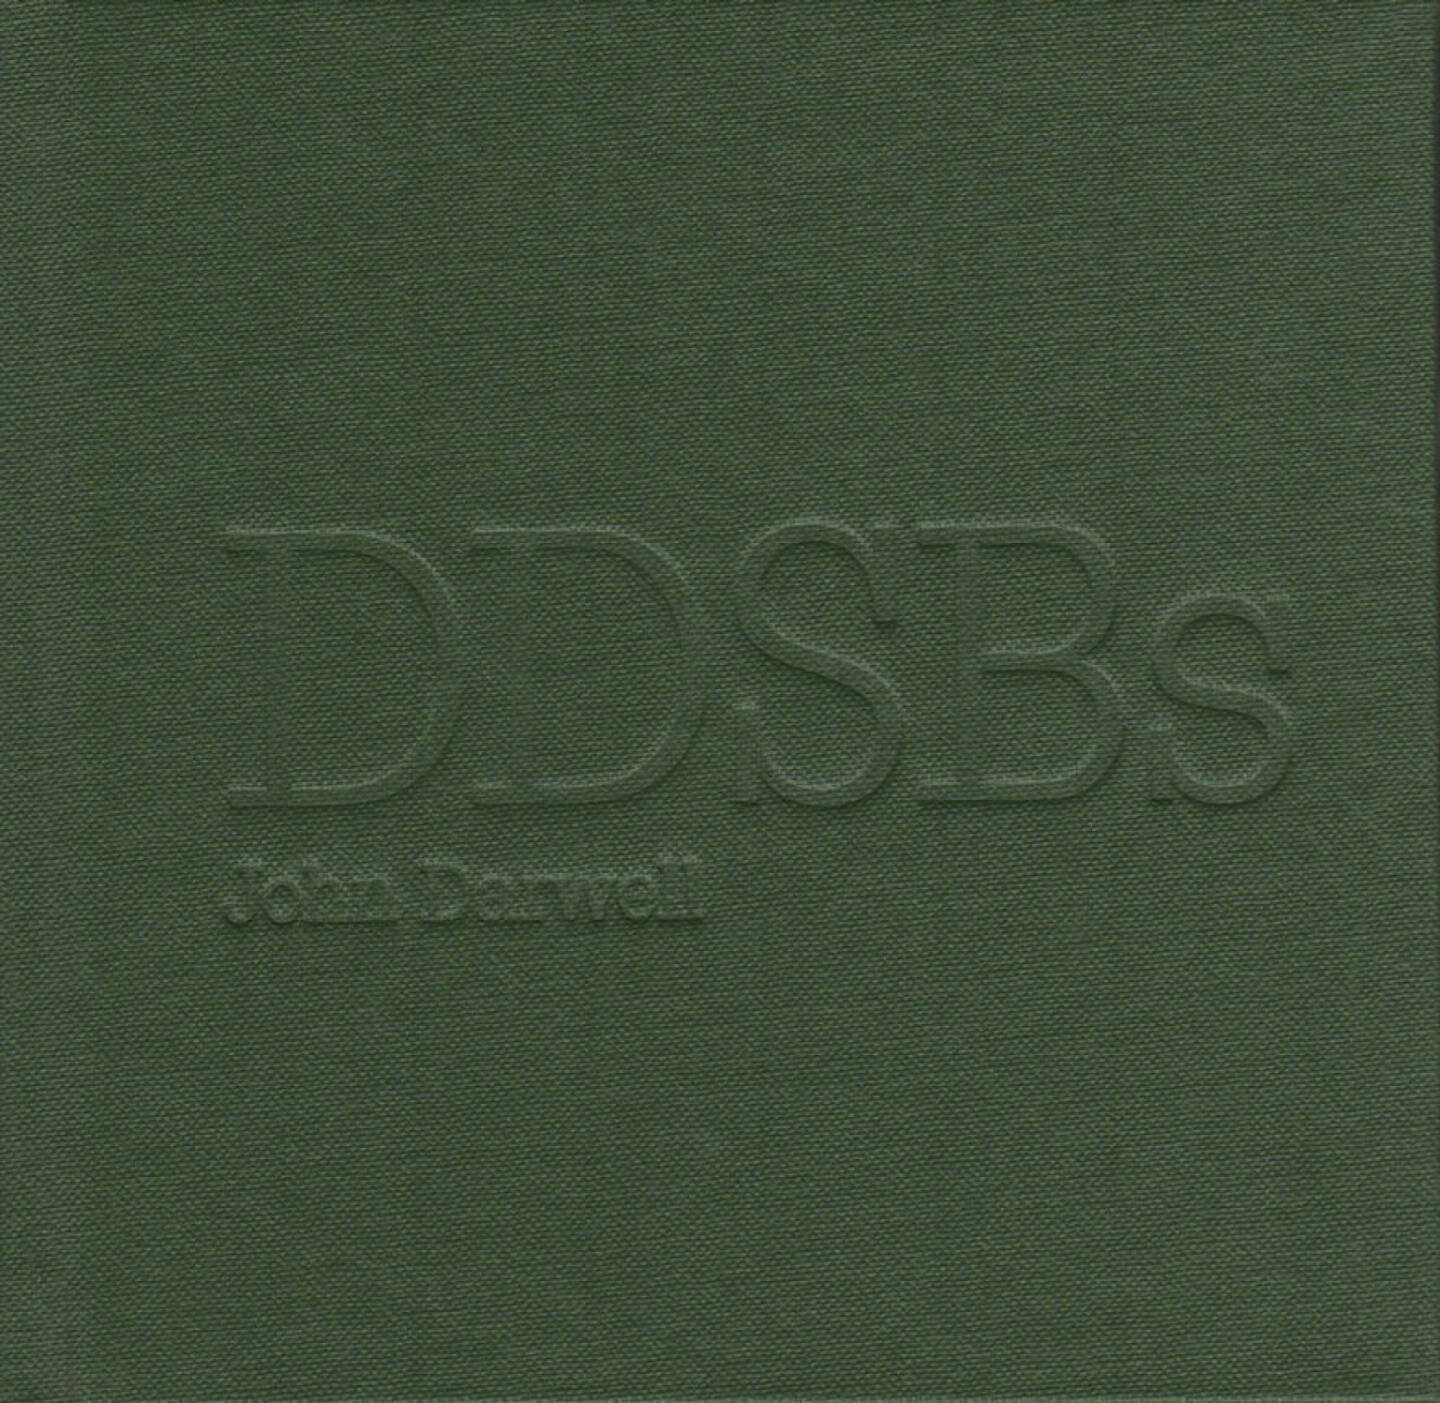 John Darwell - DDSBs - Discarded Dog Sh*t Bags, mynewtpress, 2013, Cover - http://josefchladek.com/book/john_darwell_-_ddsbs_-_discarded_dog_sht_bags